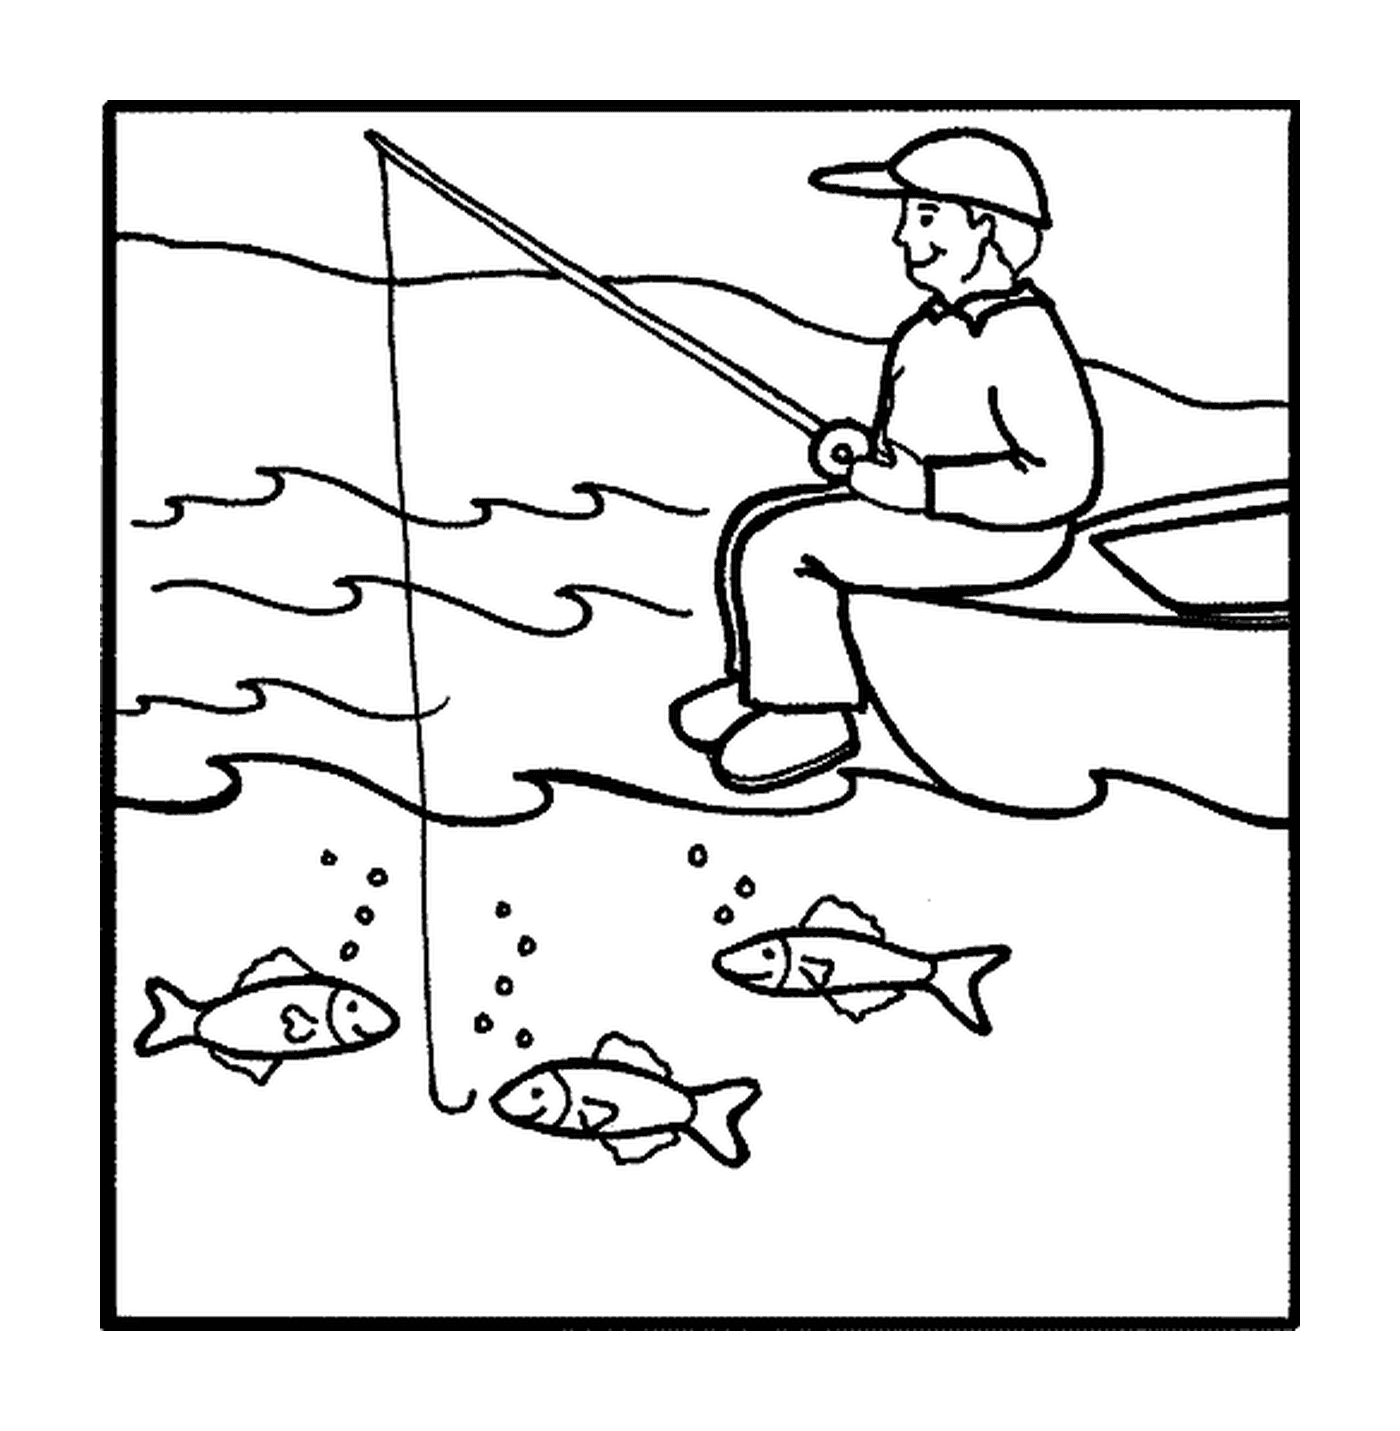  Pesca de hombres 